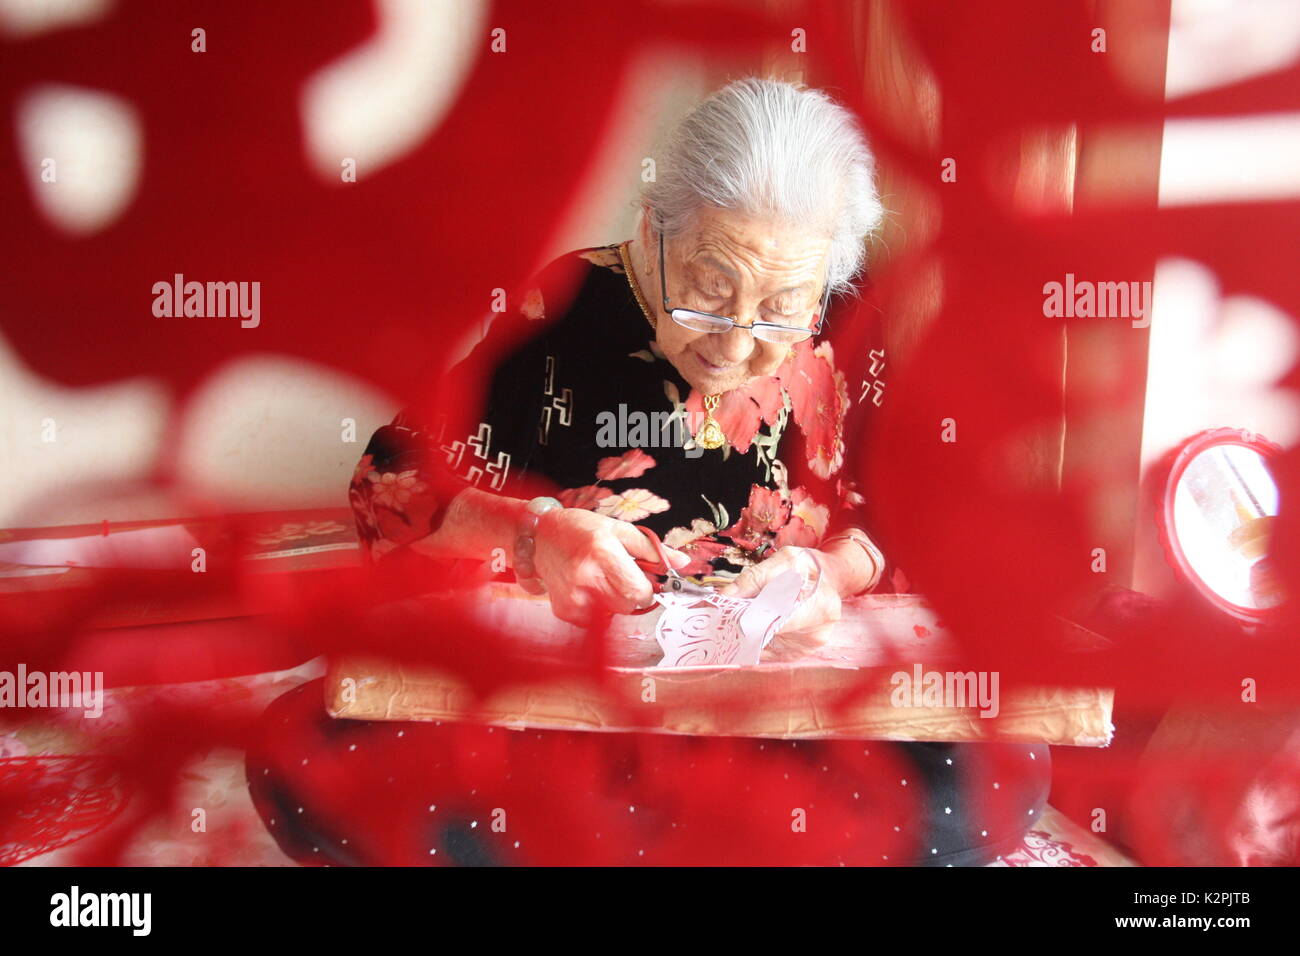 (170831) - yantai, Aug 31, 2017 (Xinhua) - Lin Guimao, 103, macht papercuttings in Yantai, Provinz Shandong, China, August 30, 2017. Lin gelernt papercutting Fähigkeiten als Kind, und jetzt immer noch gerne das Hobby. (Xinhua / Shen Jizhong) (Ry) Stockfoto